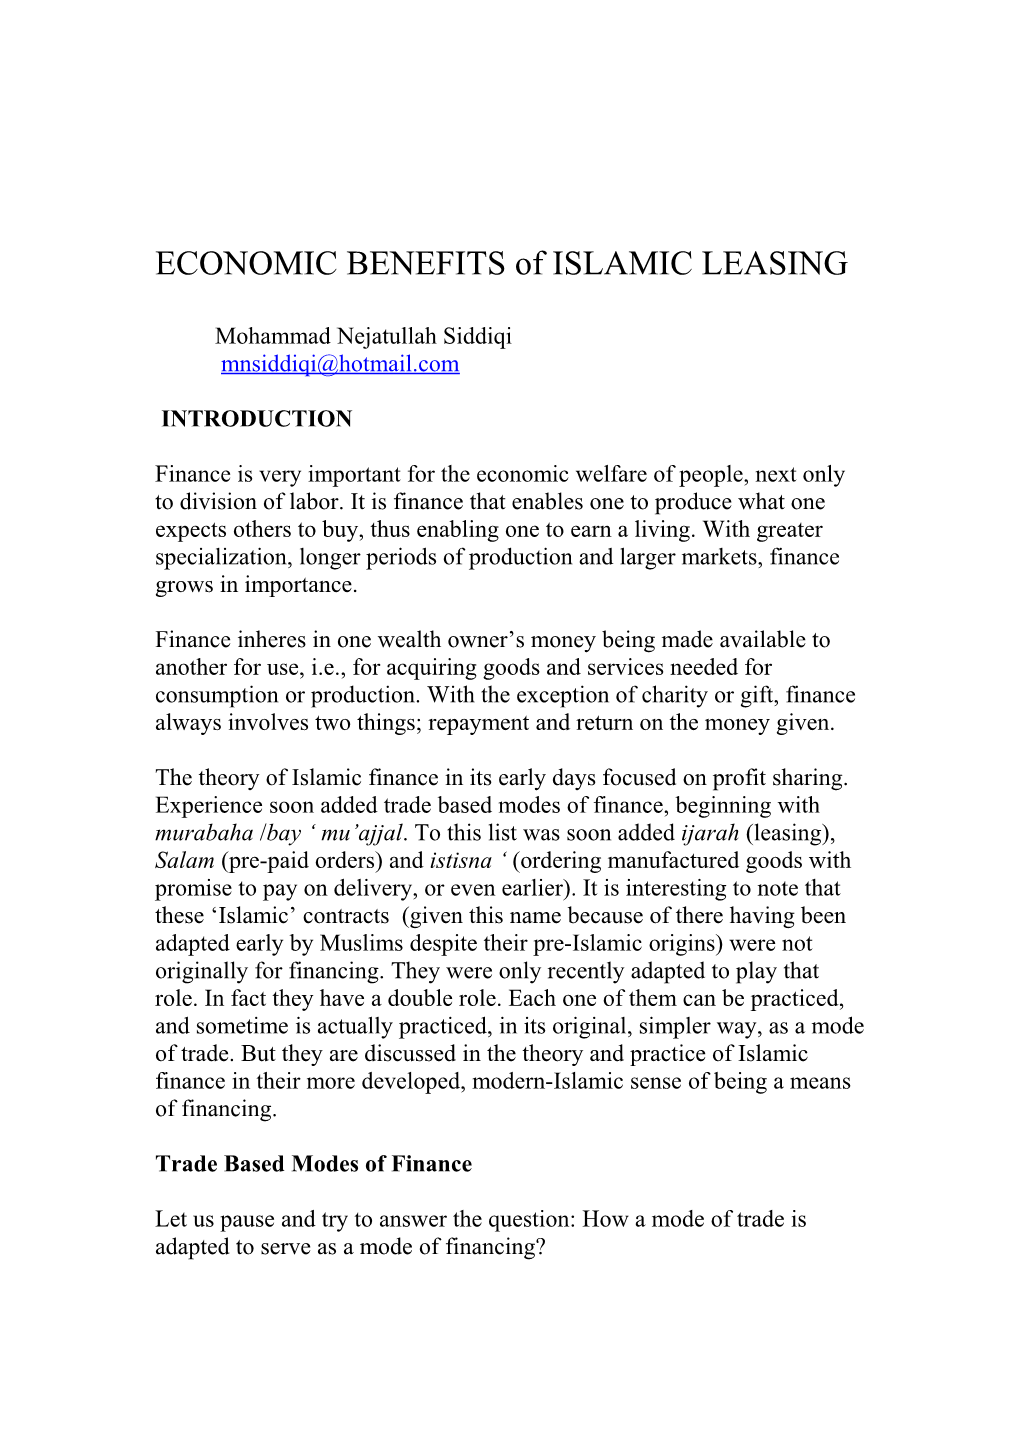 ECONOMIC BENEFITS Ofislamic LEASING